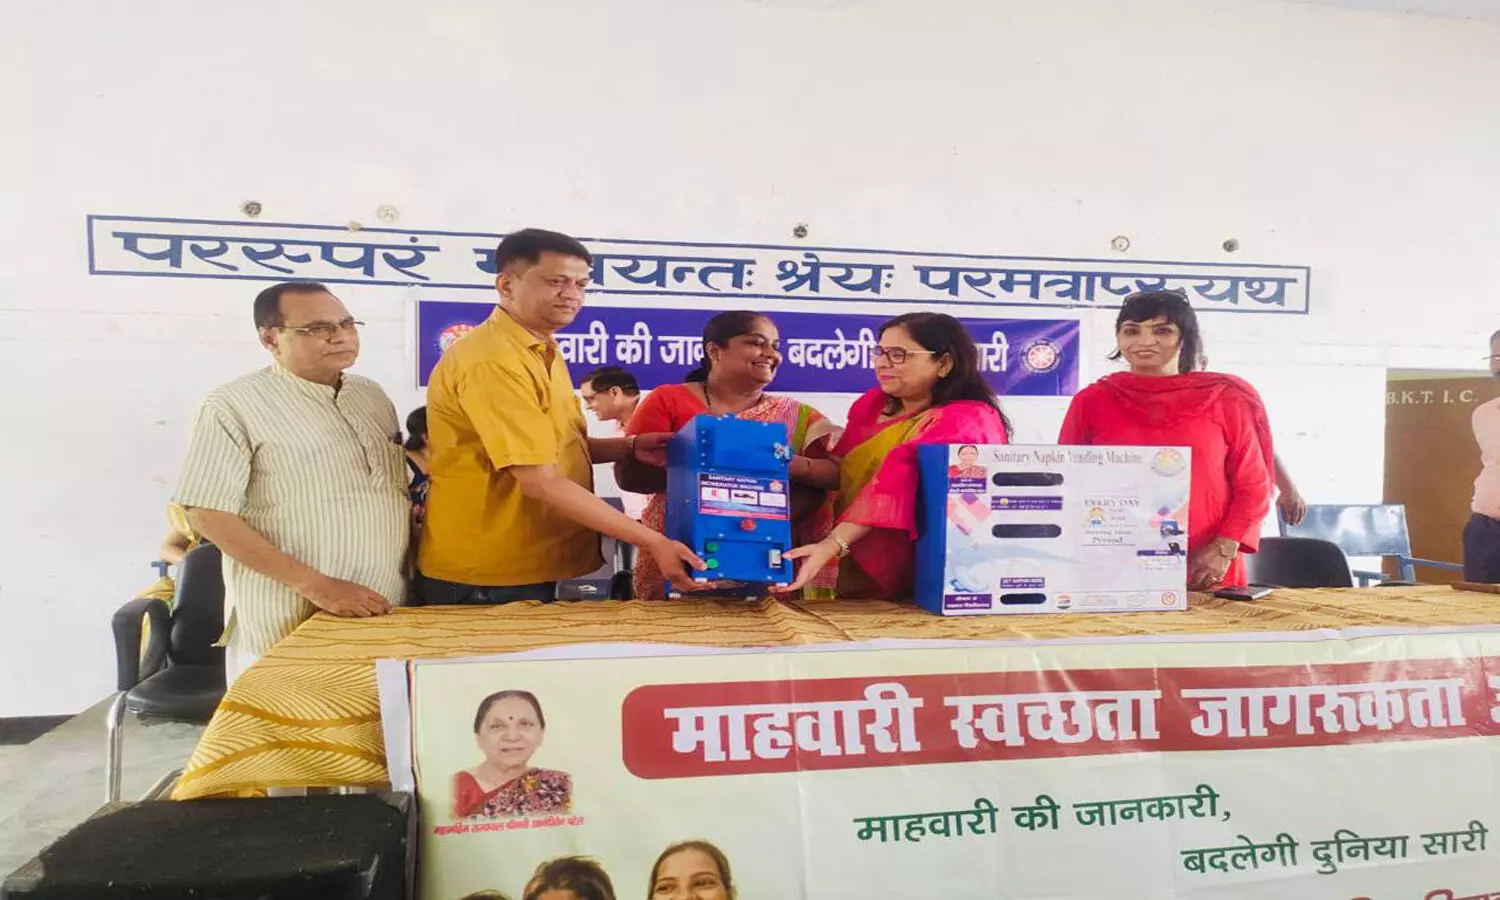 University of Lucknow organizes Women health campaign